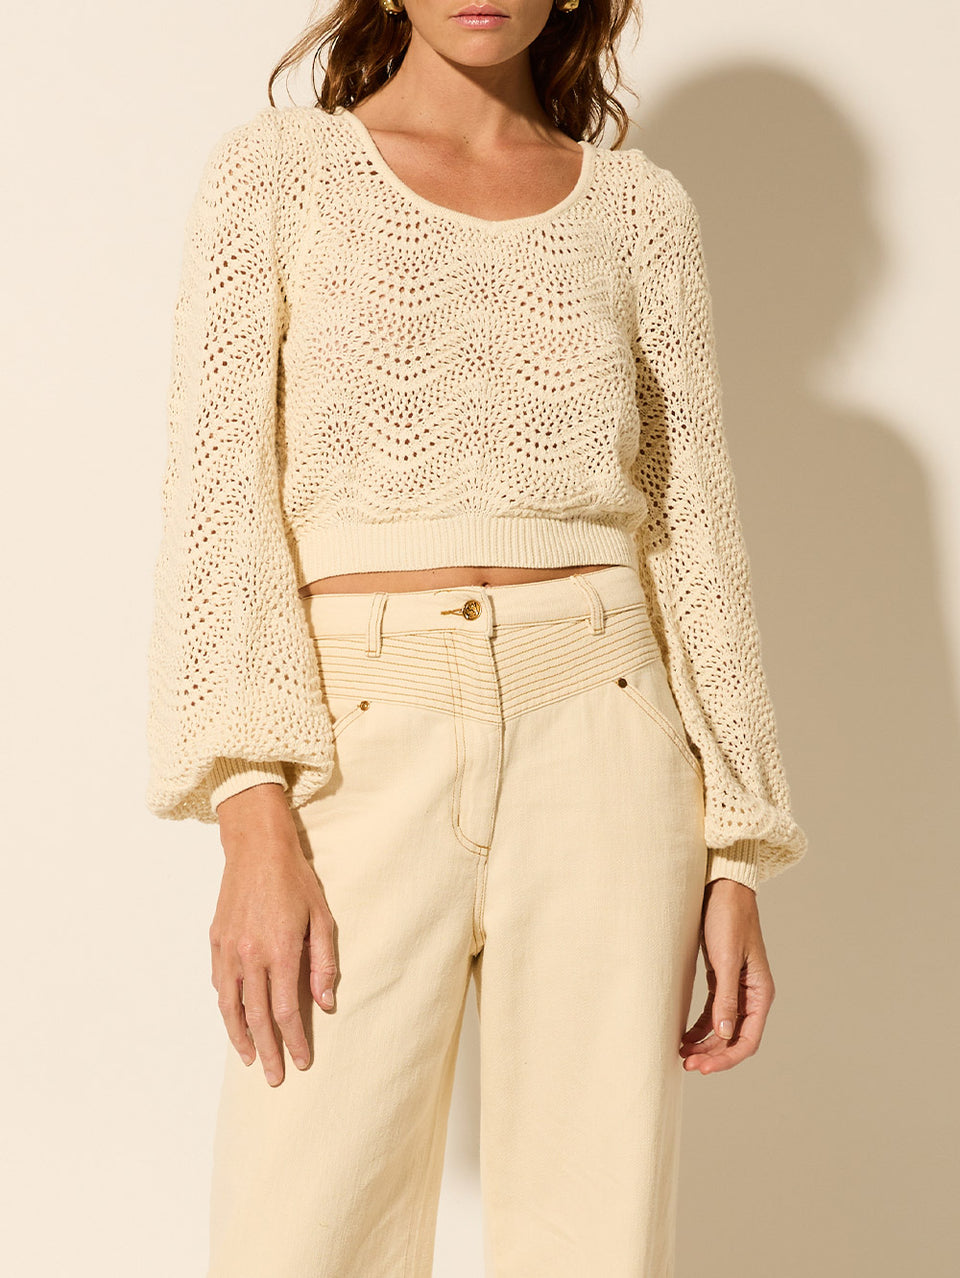 Mariana Knit Top KIVARI | Model wears cream knit top